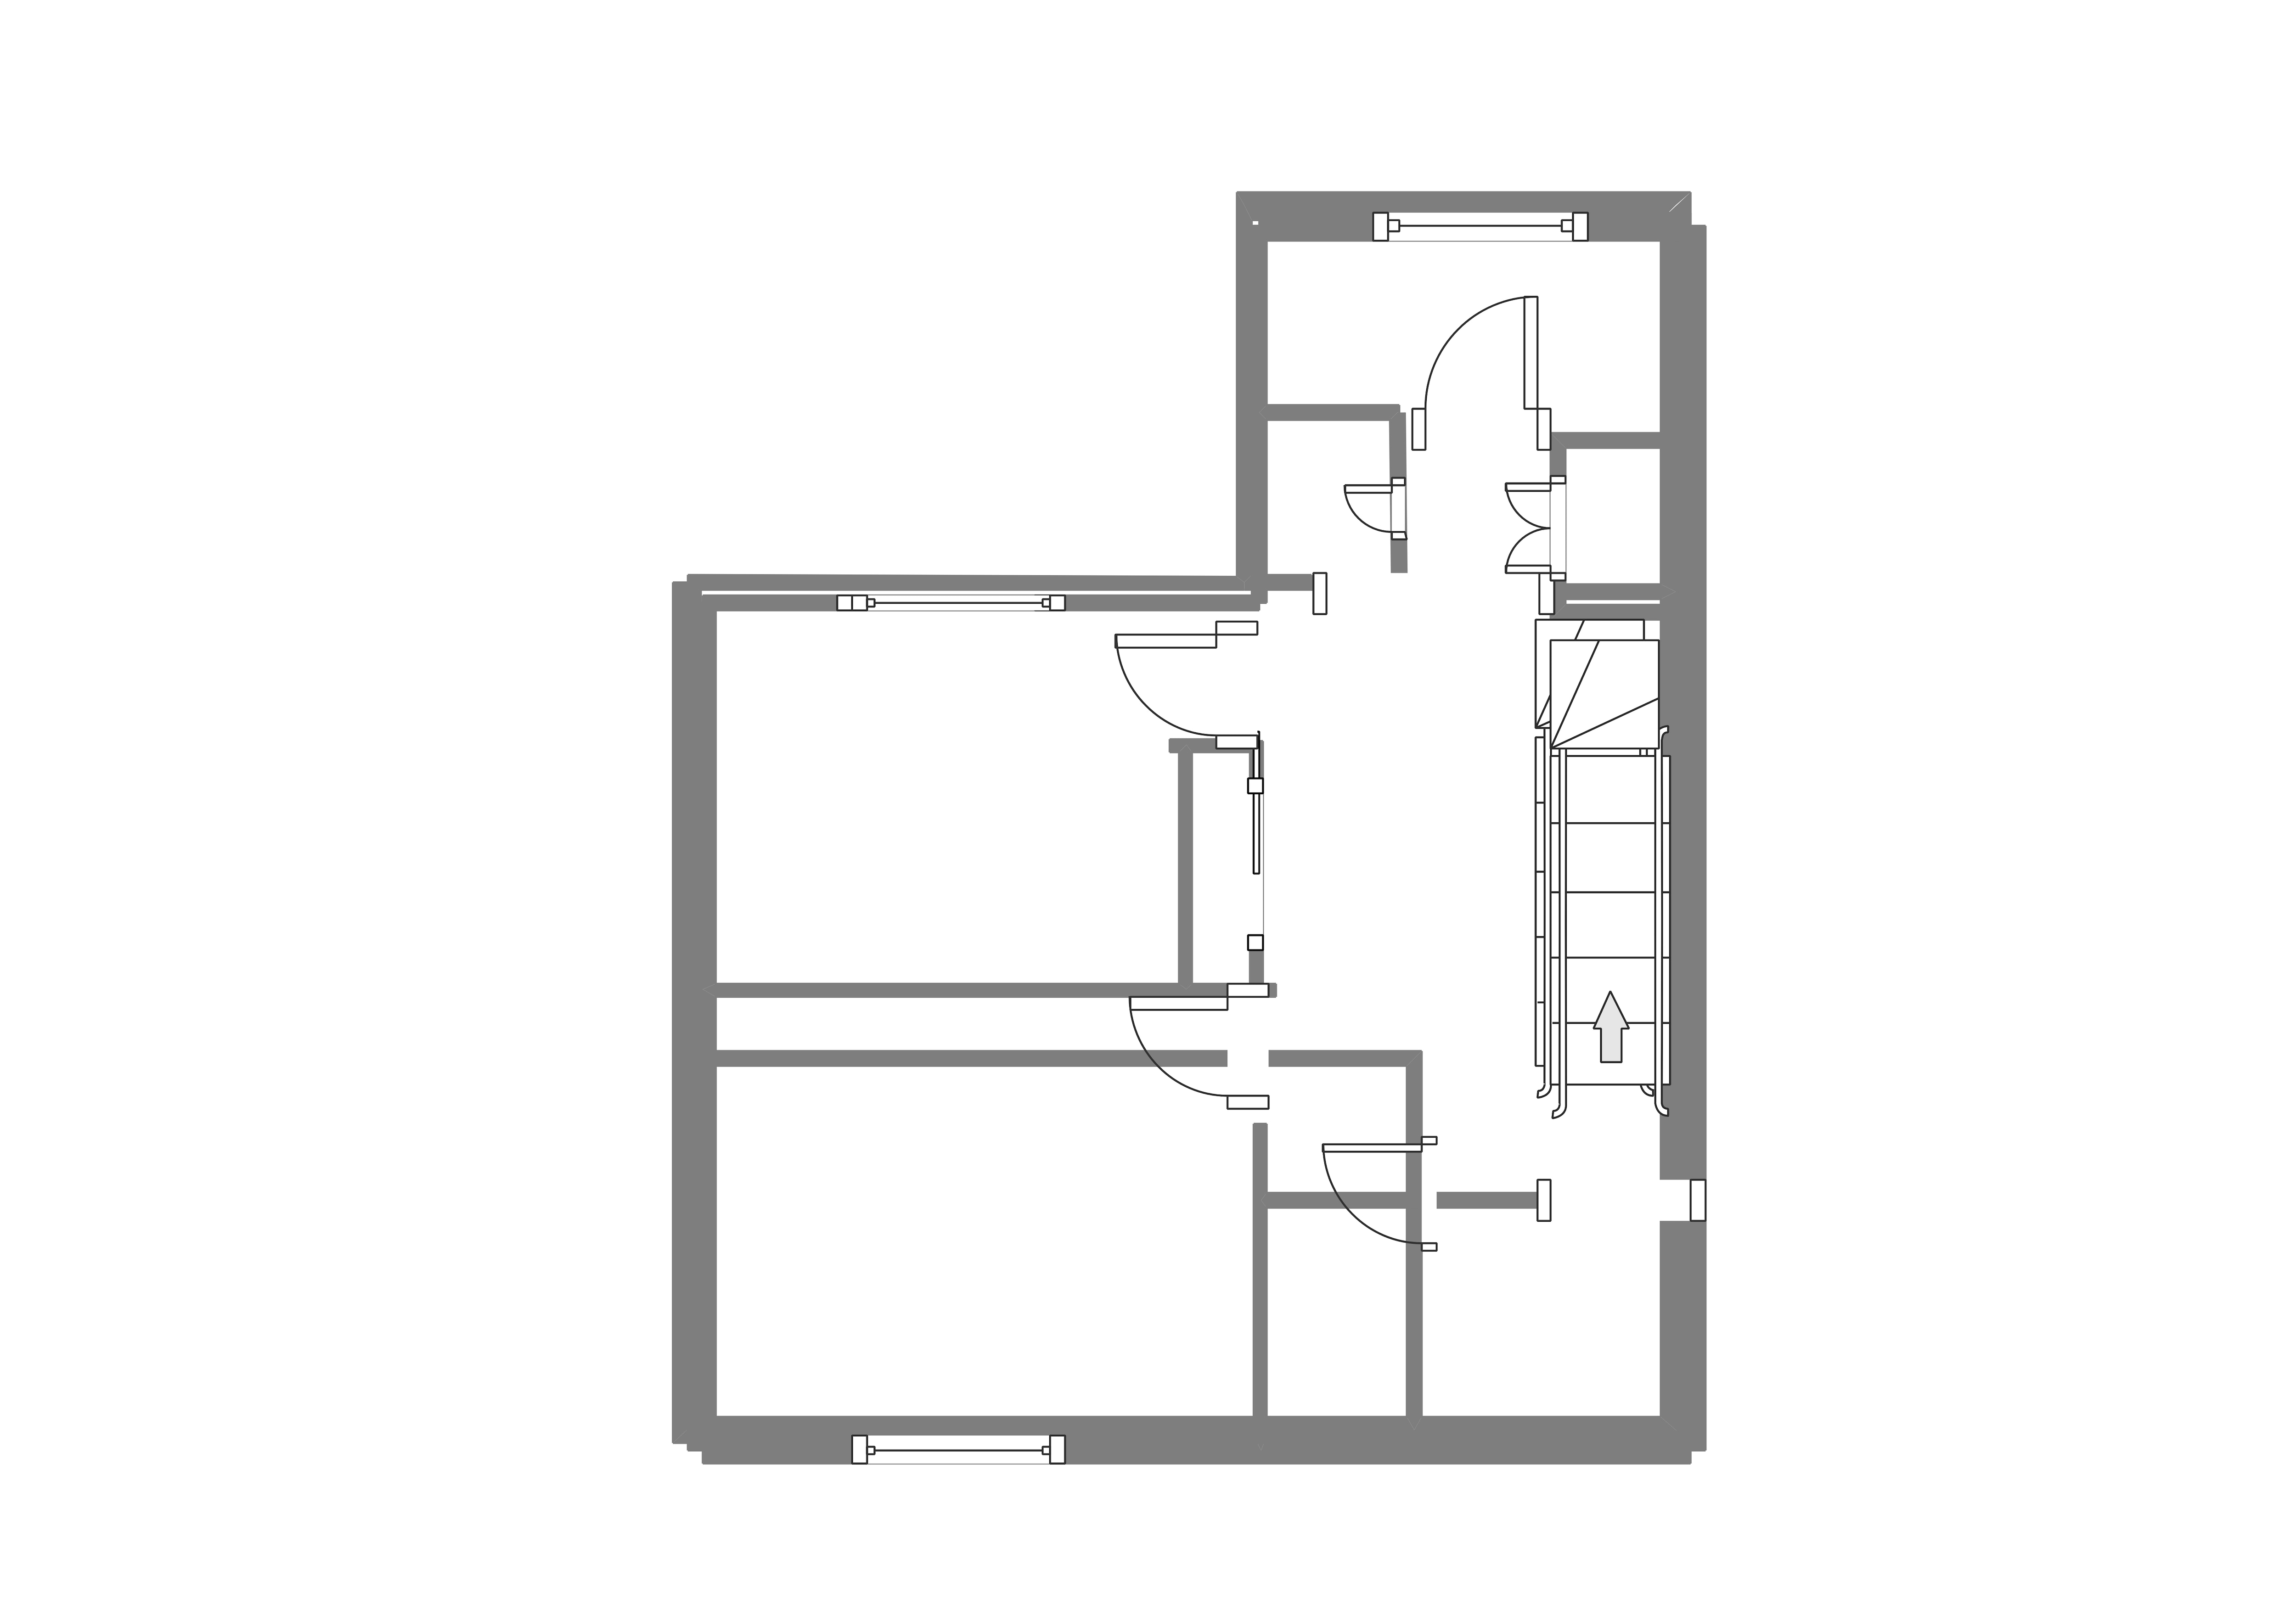 mini house layout